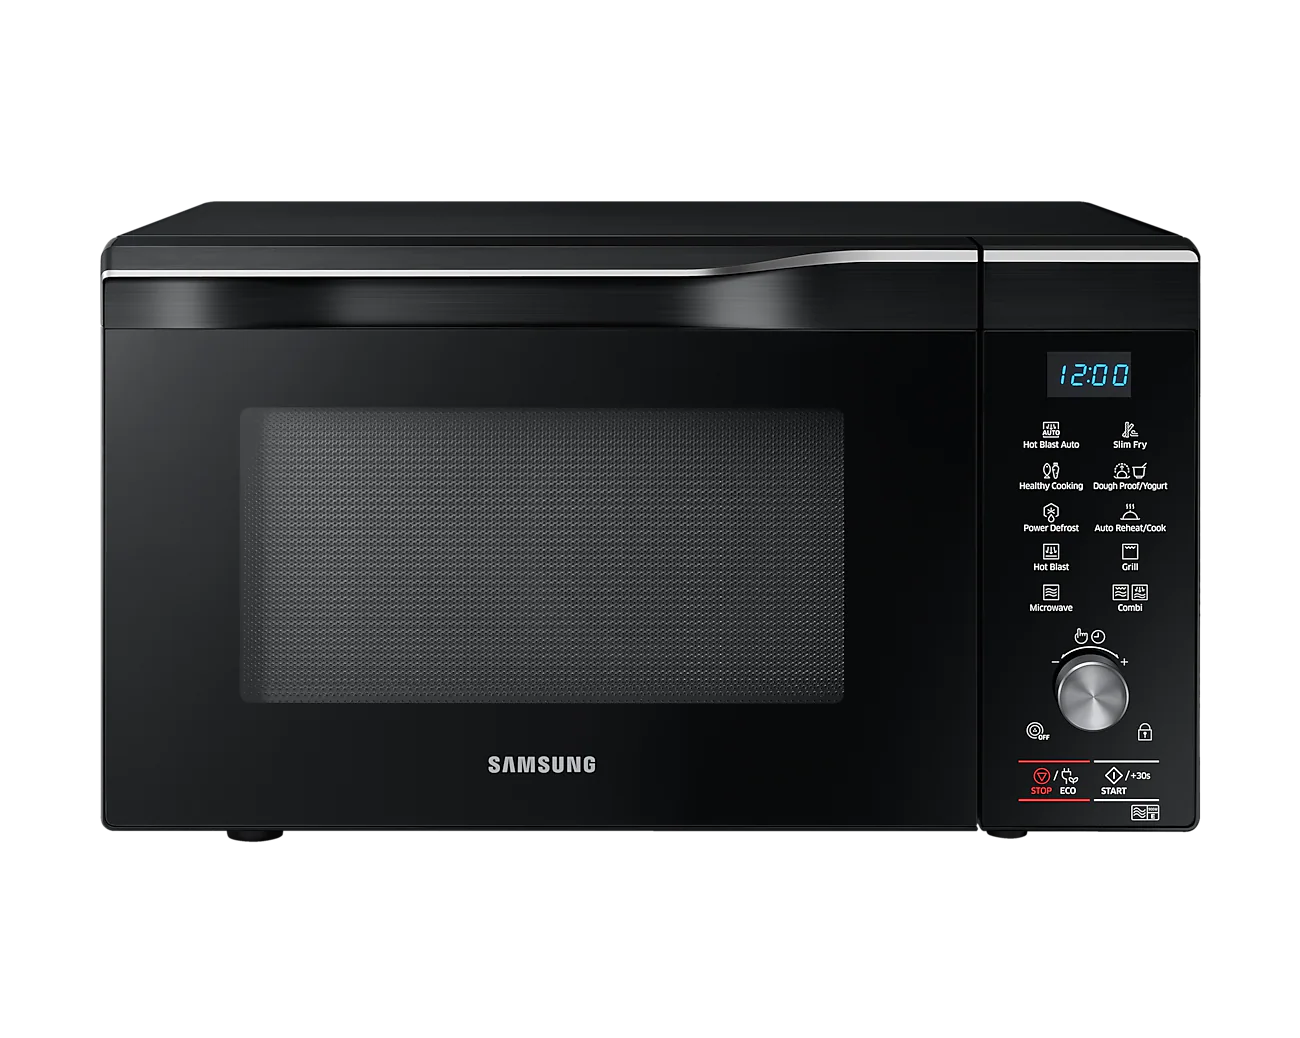 Samsung 32L Convection Microwave Oven MC32K7055CKEU